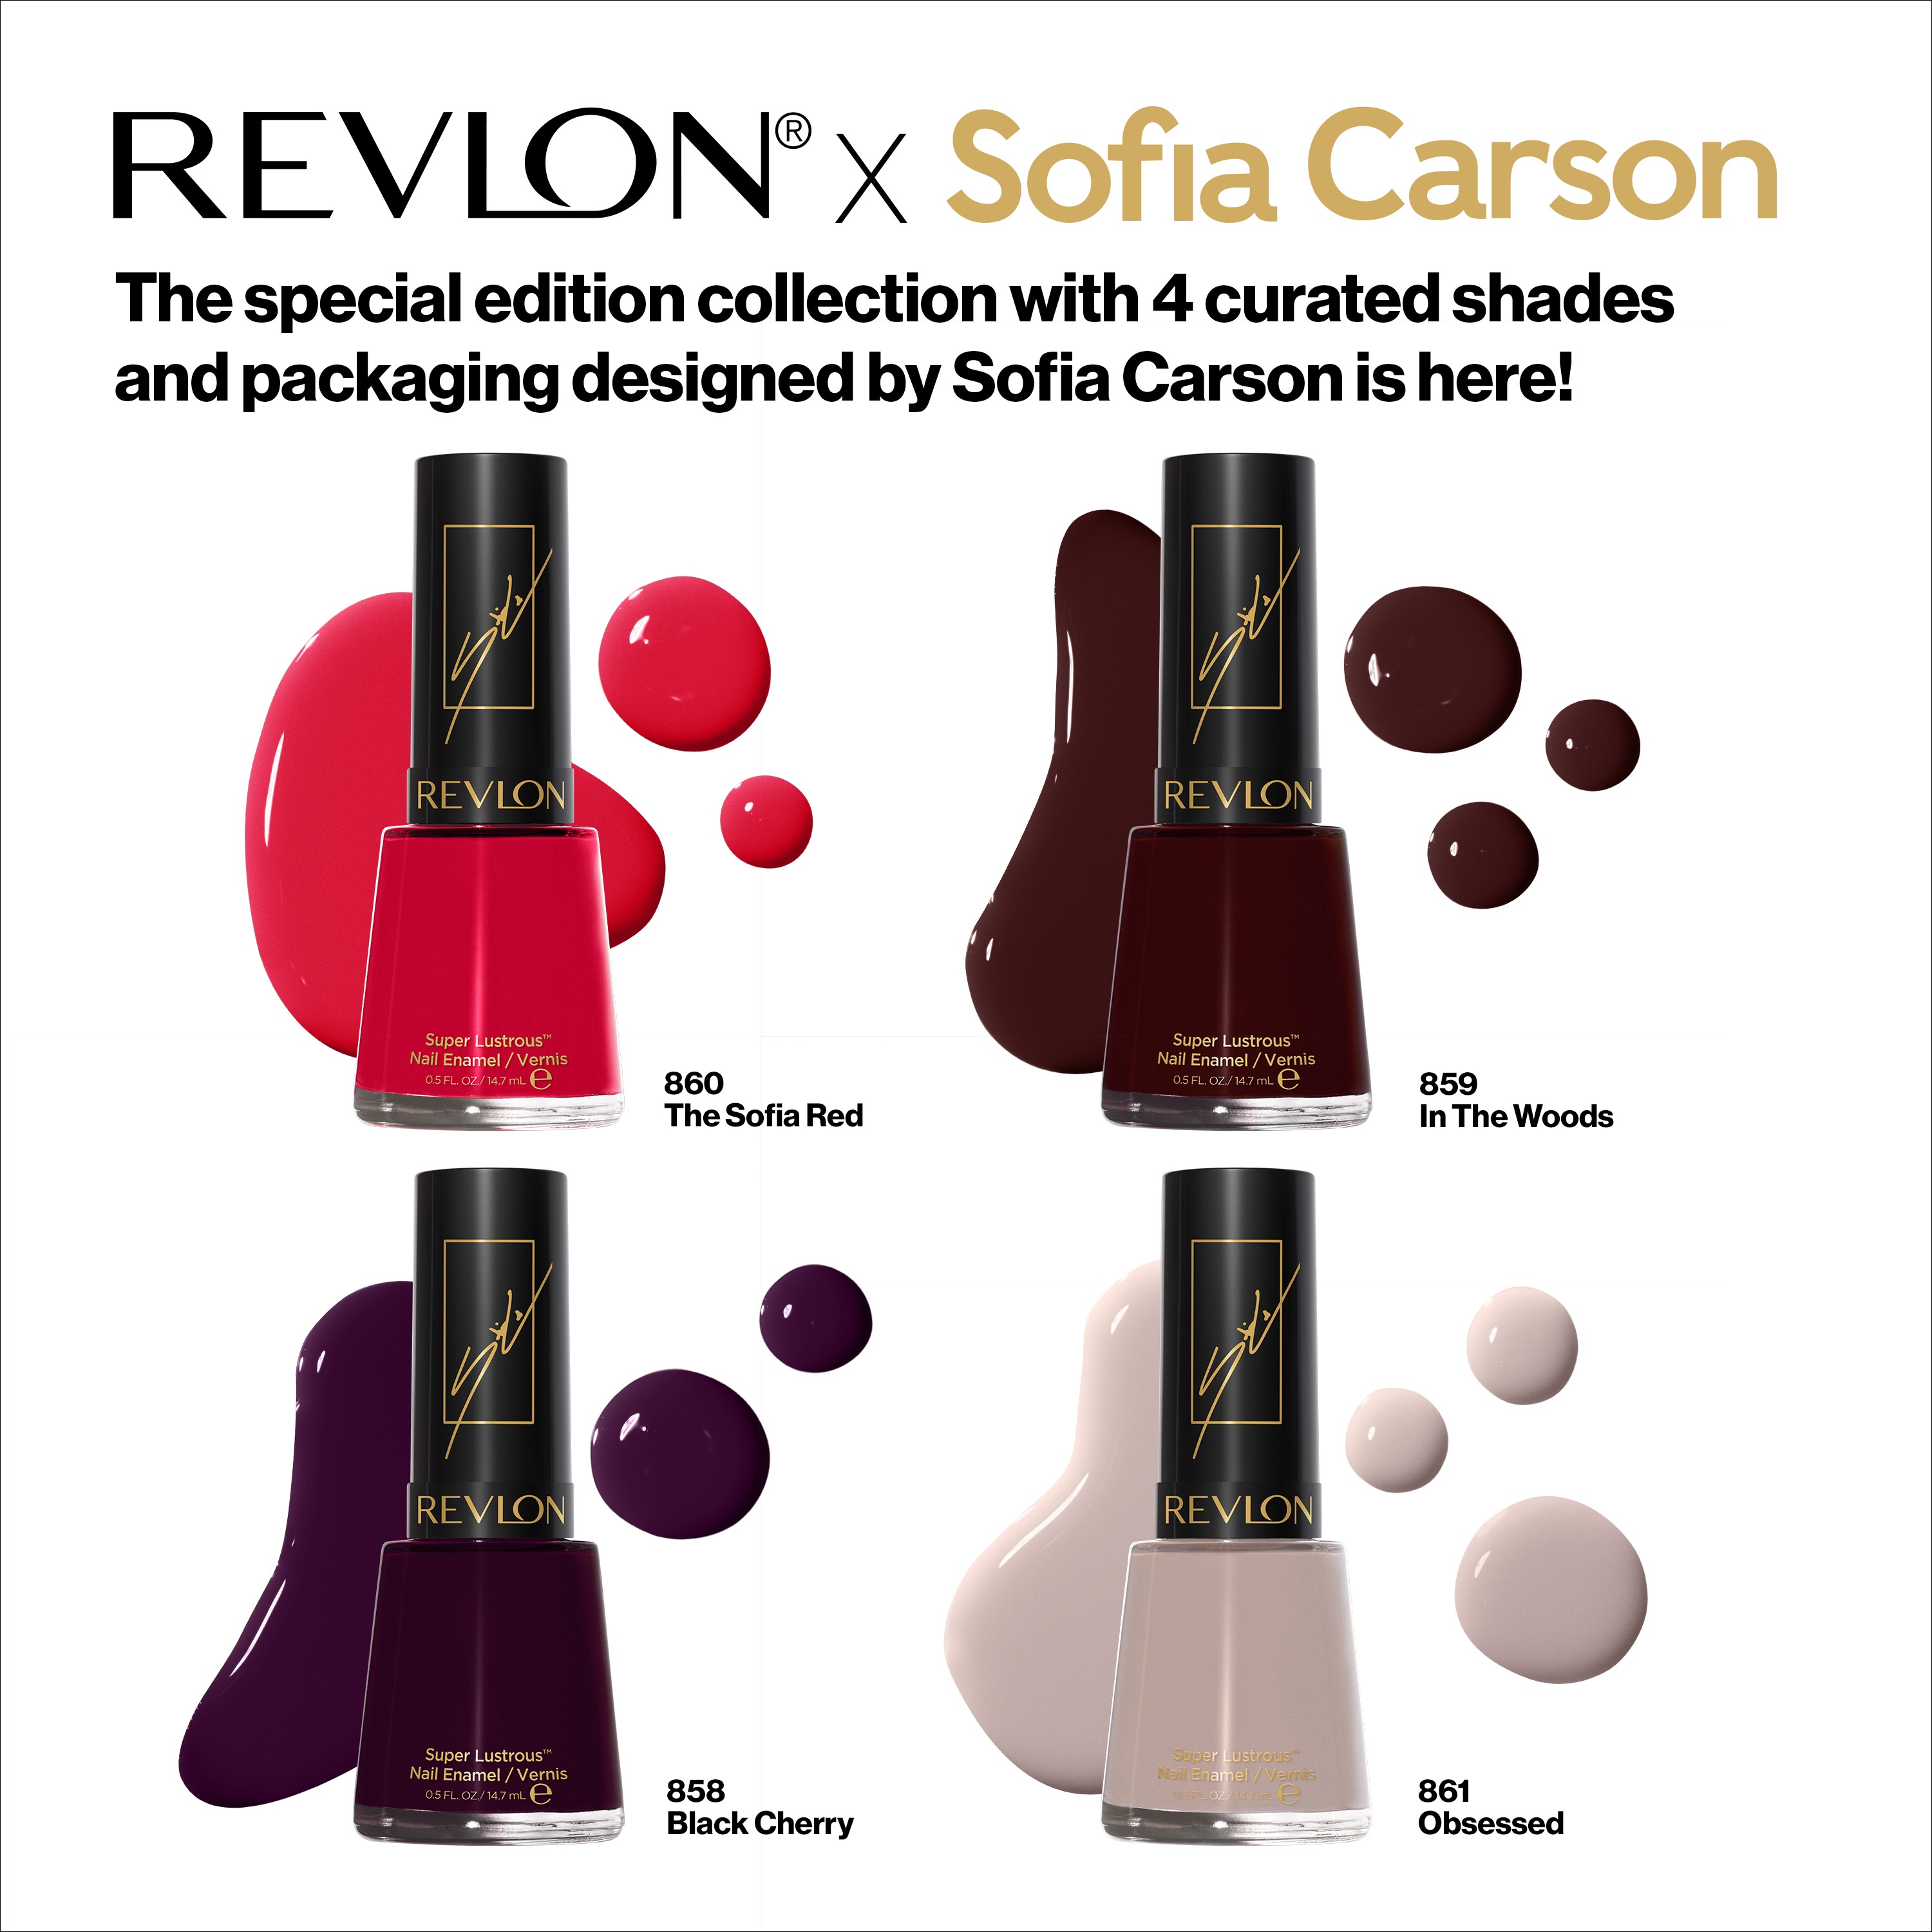 Revlon x Sofia Carson Super Lustrous Nail Enamel - In The Woods - image 4 of 8